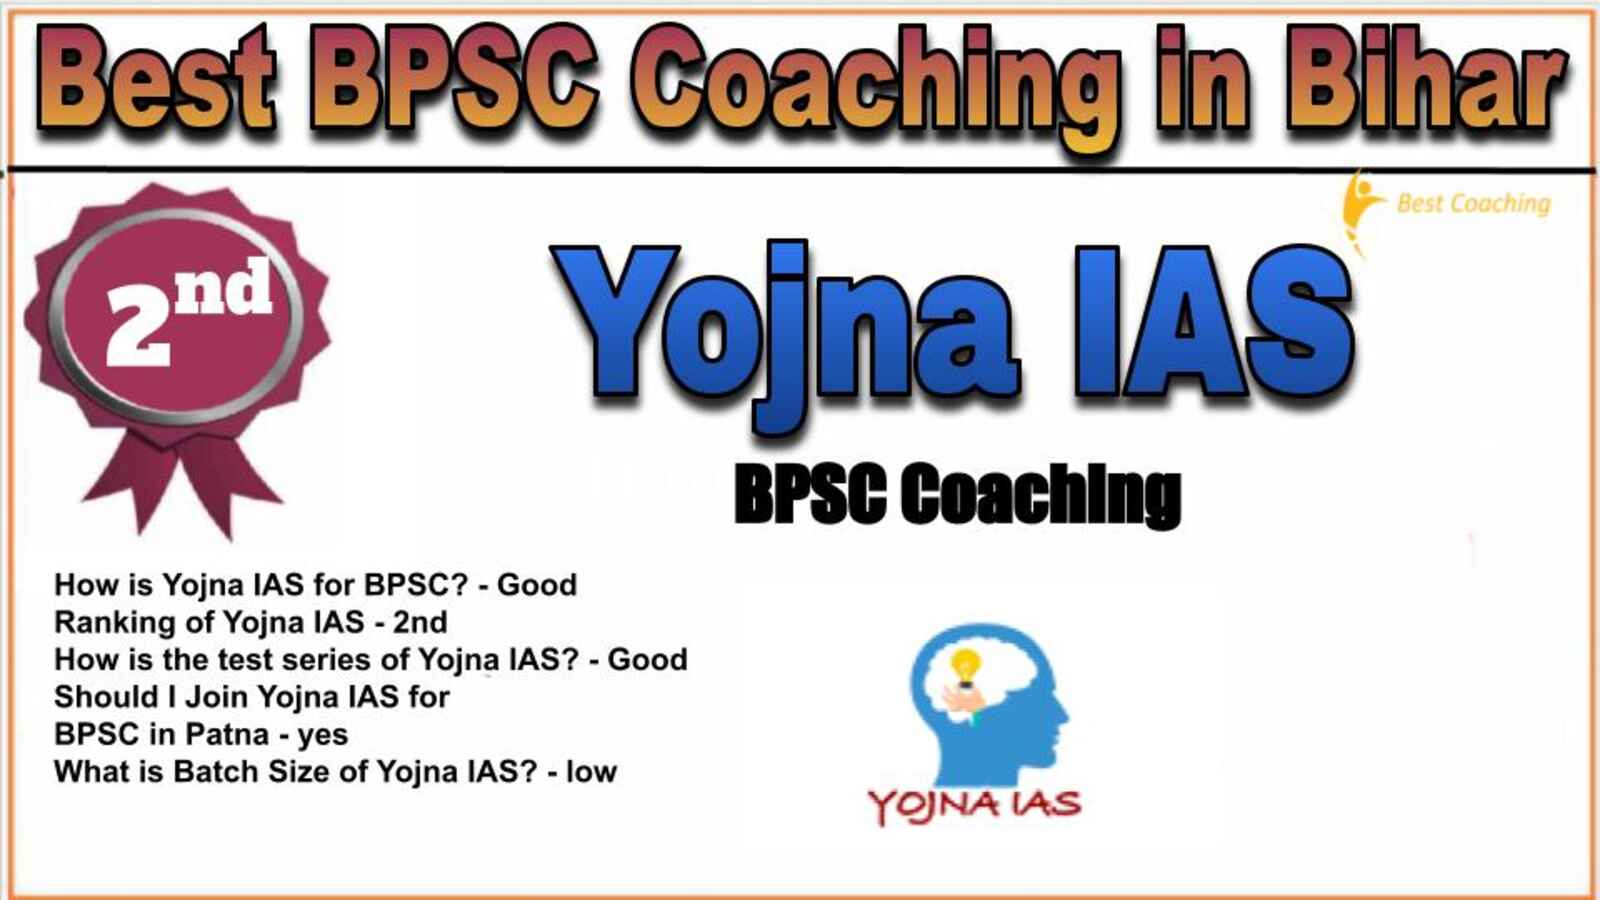 Rank 2 Best BPSC Coaching Institute in Bihar